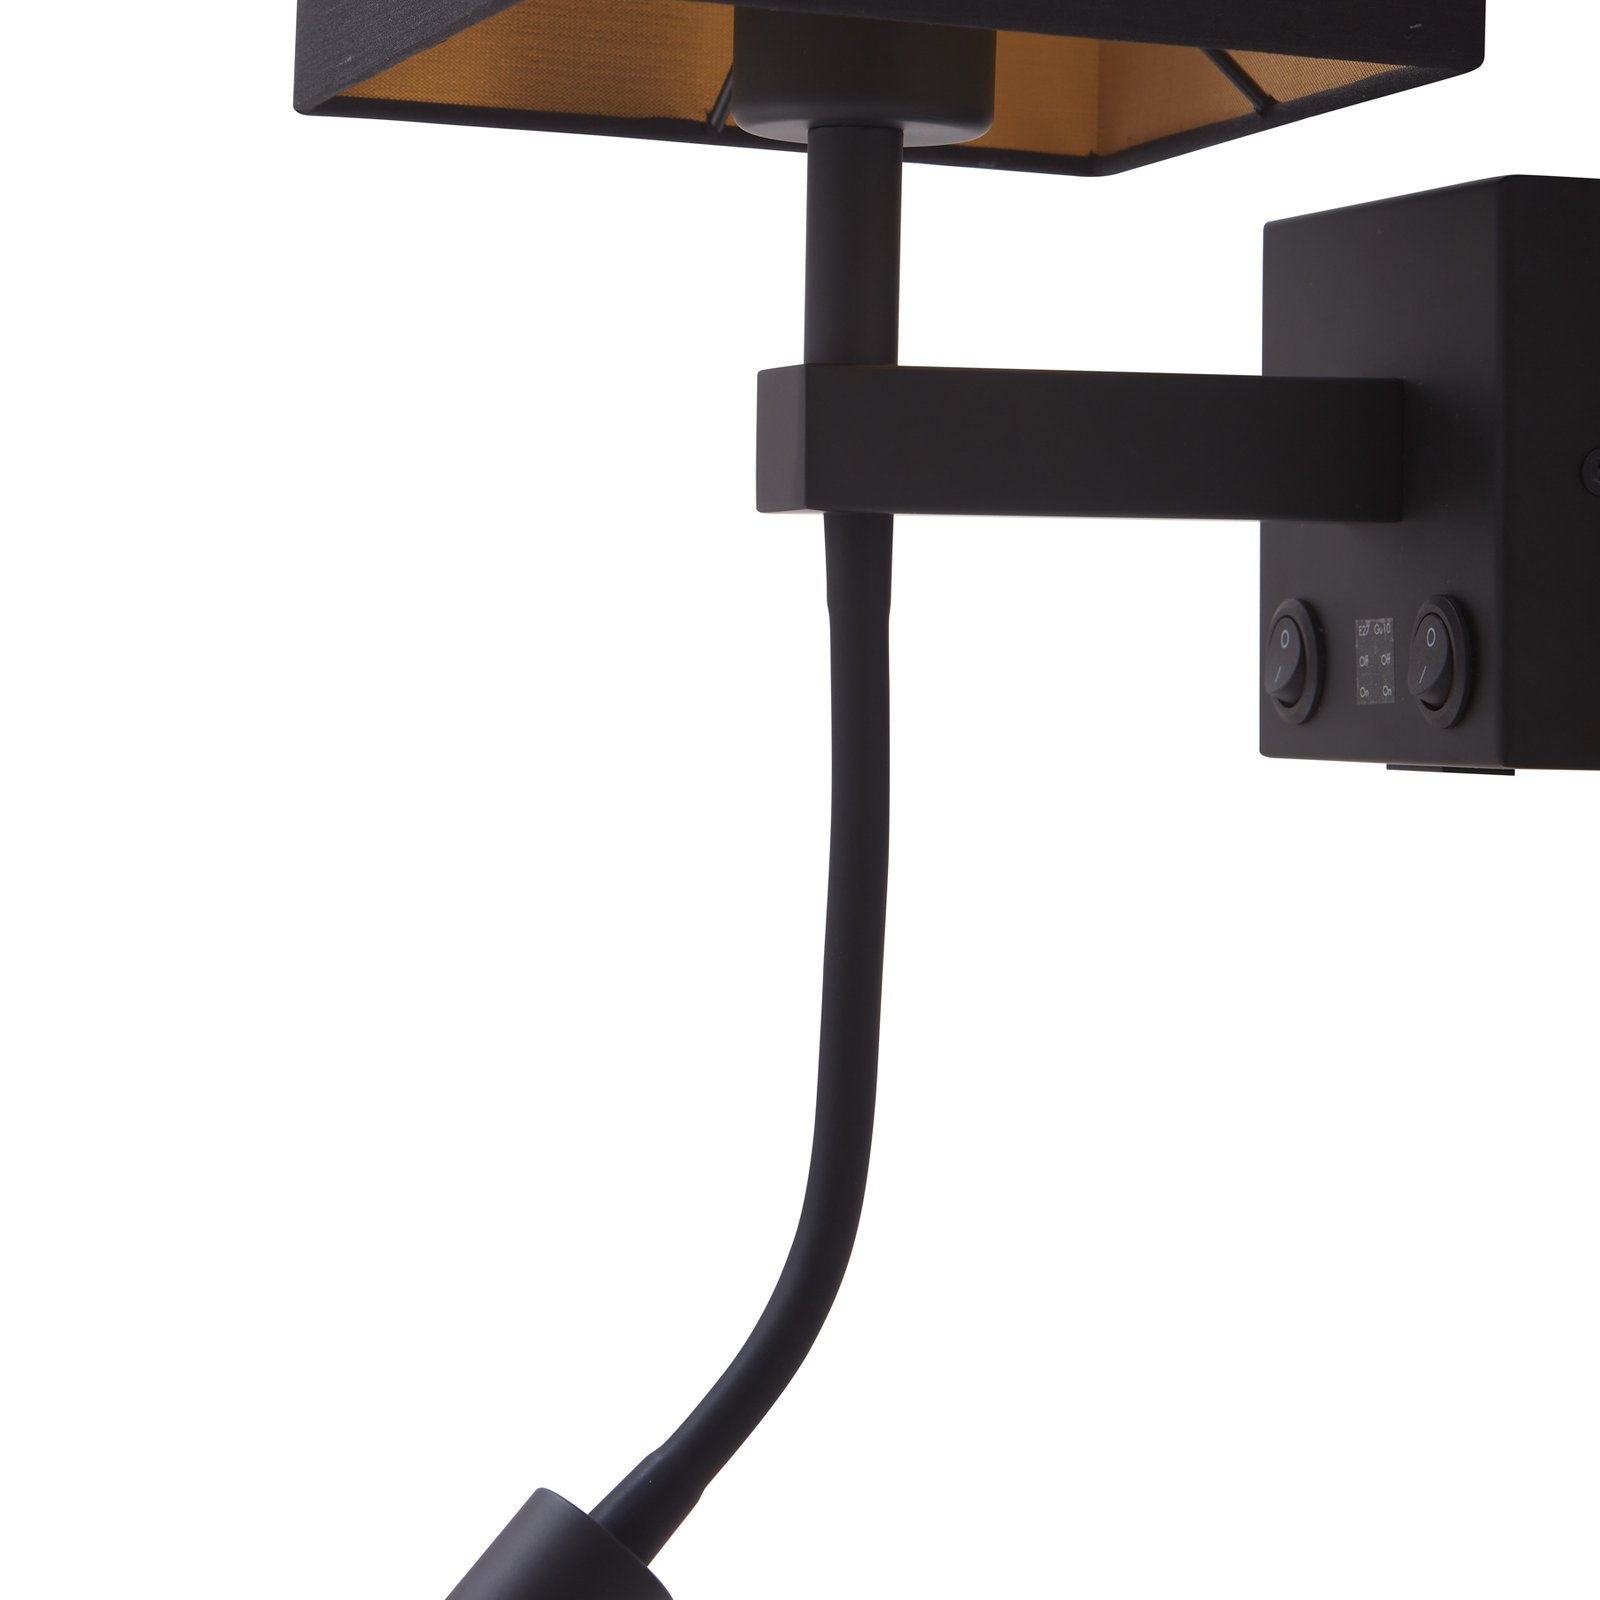 Lindby wandlamp Thorid, zwart/goud, stof, USB, flexibele arm